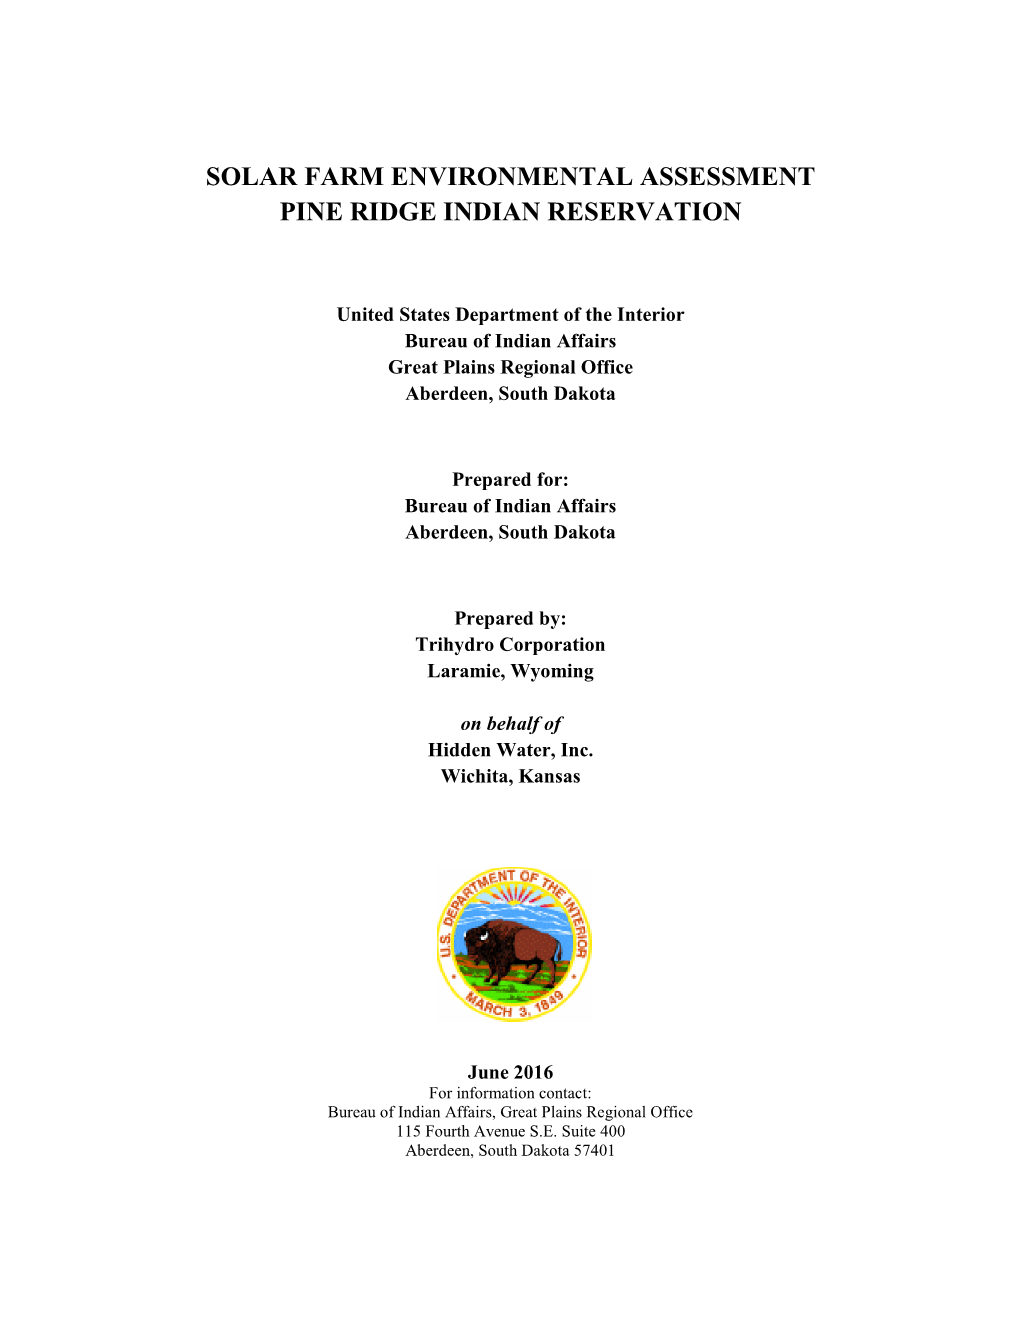 Bureau of Indian Affairs' Solar Farm Environmental Assessment